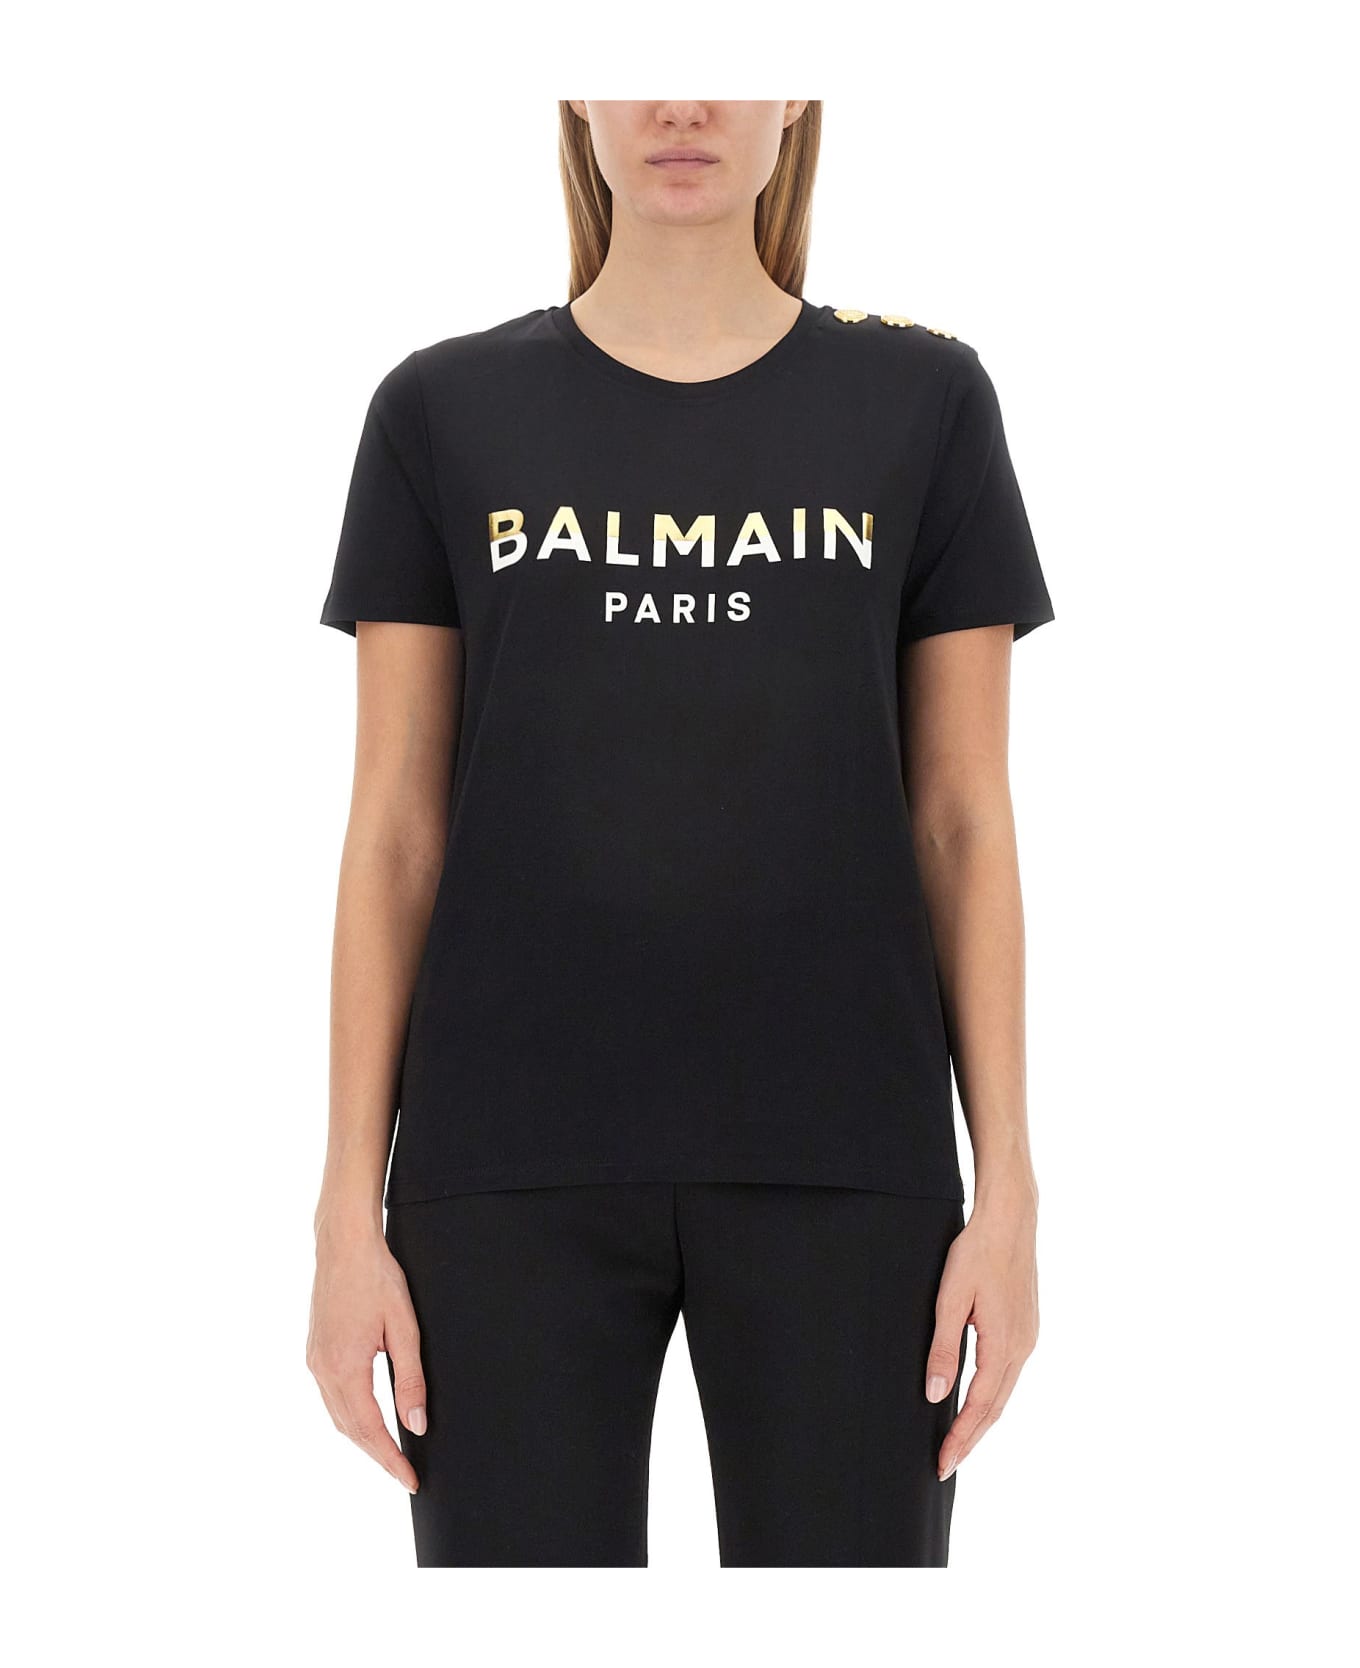 Balmain Logo Printed Crewneck T-shirt - BLACK/GOLD/CREAM Tシャツ